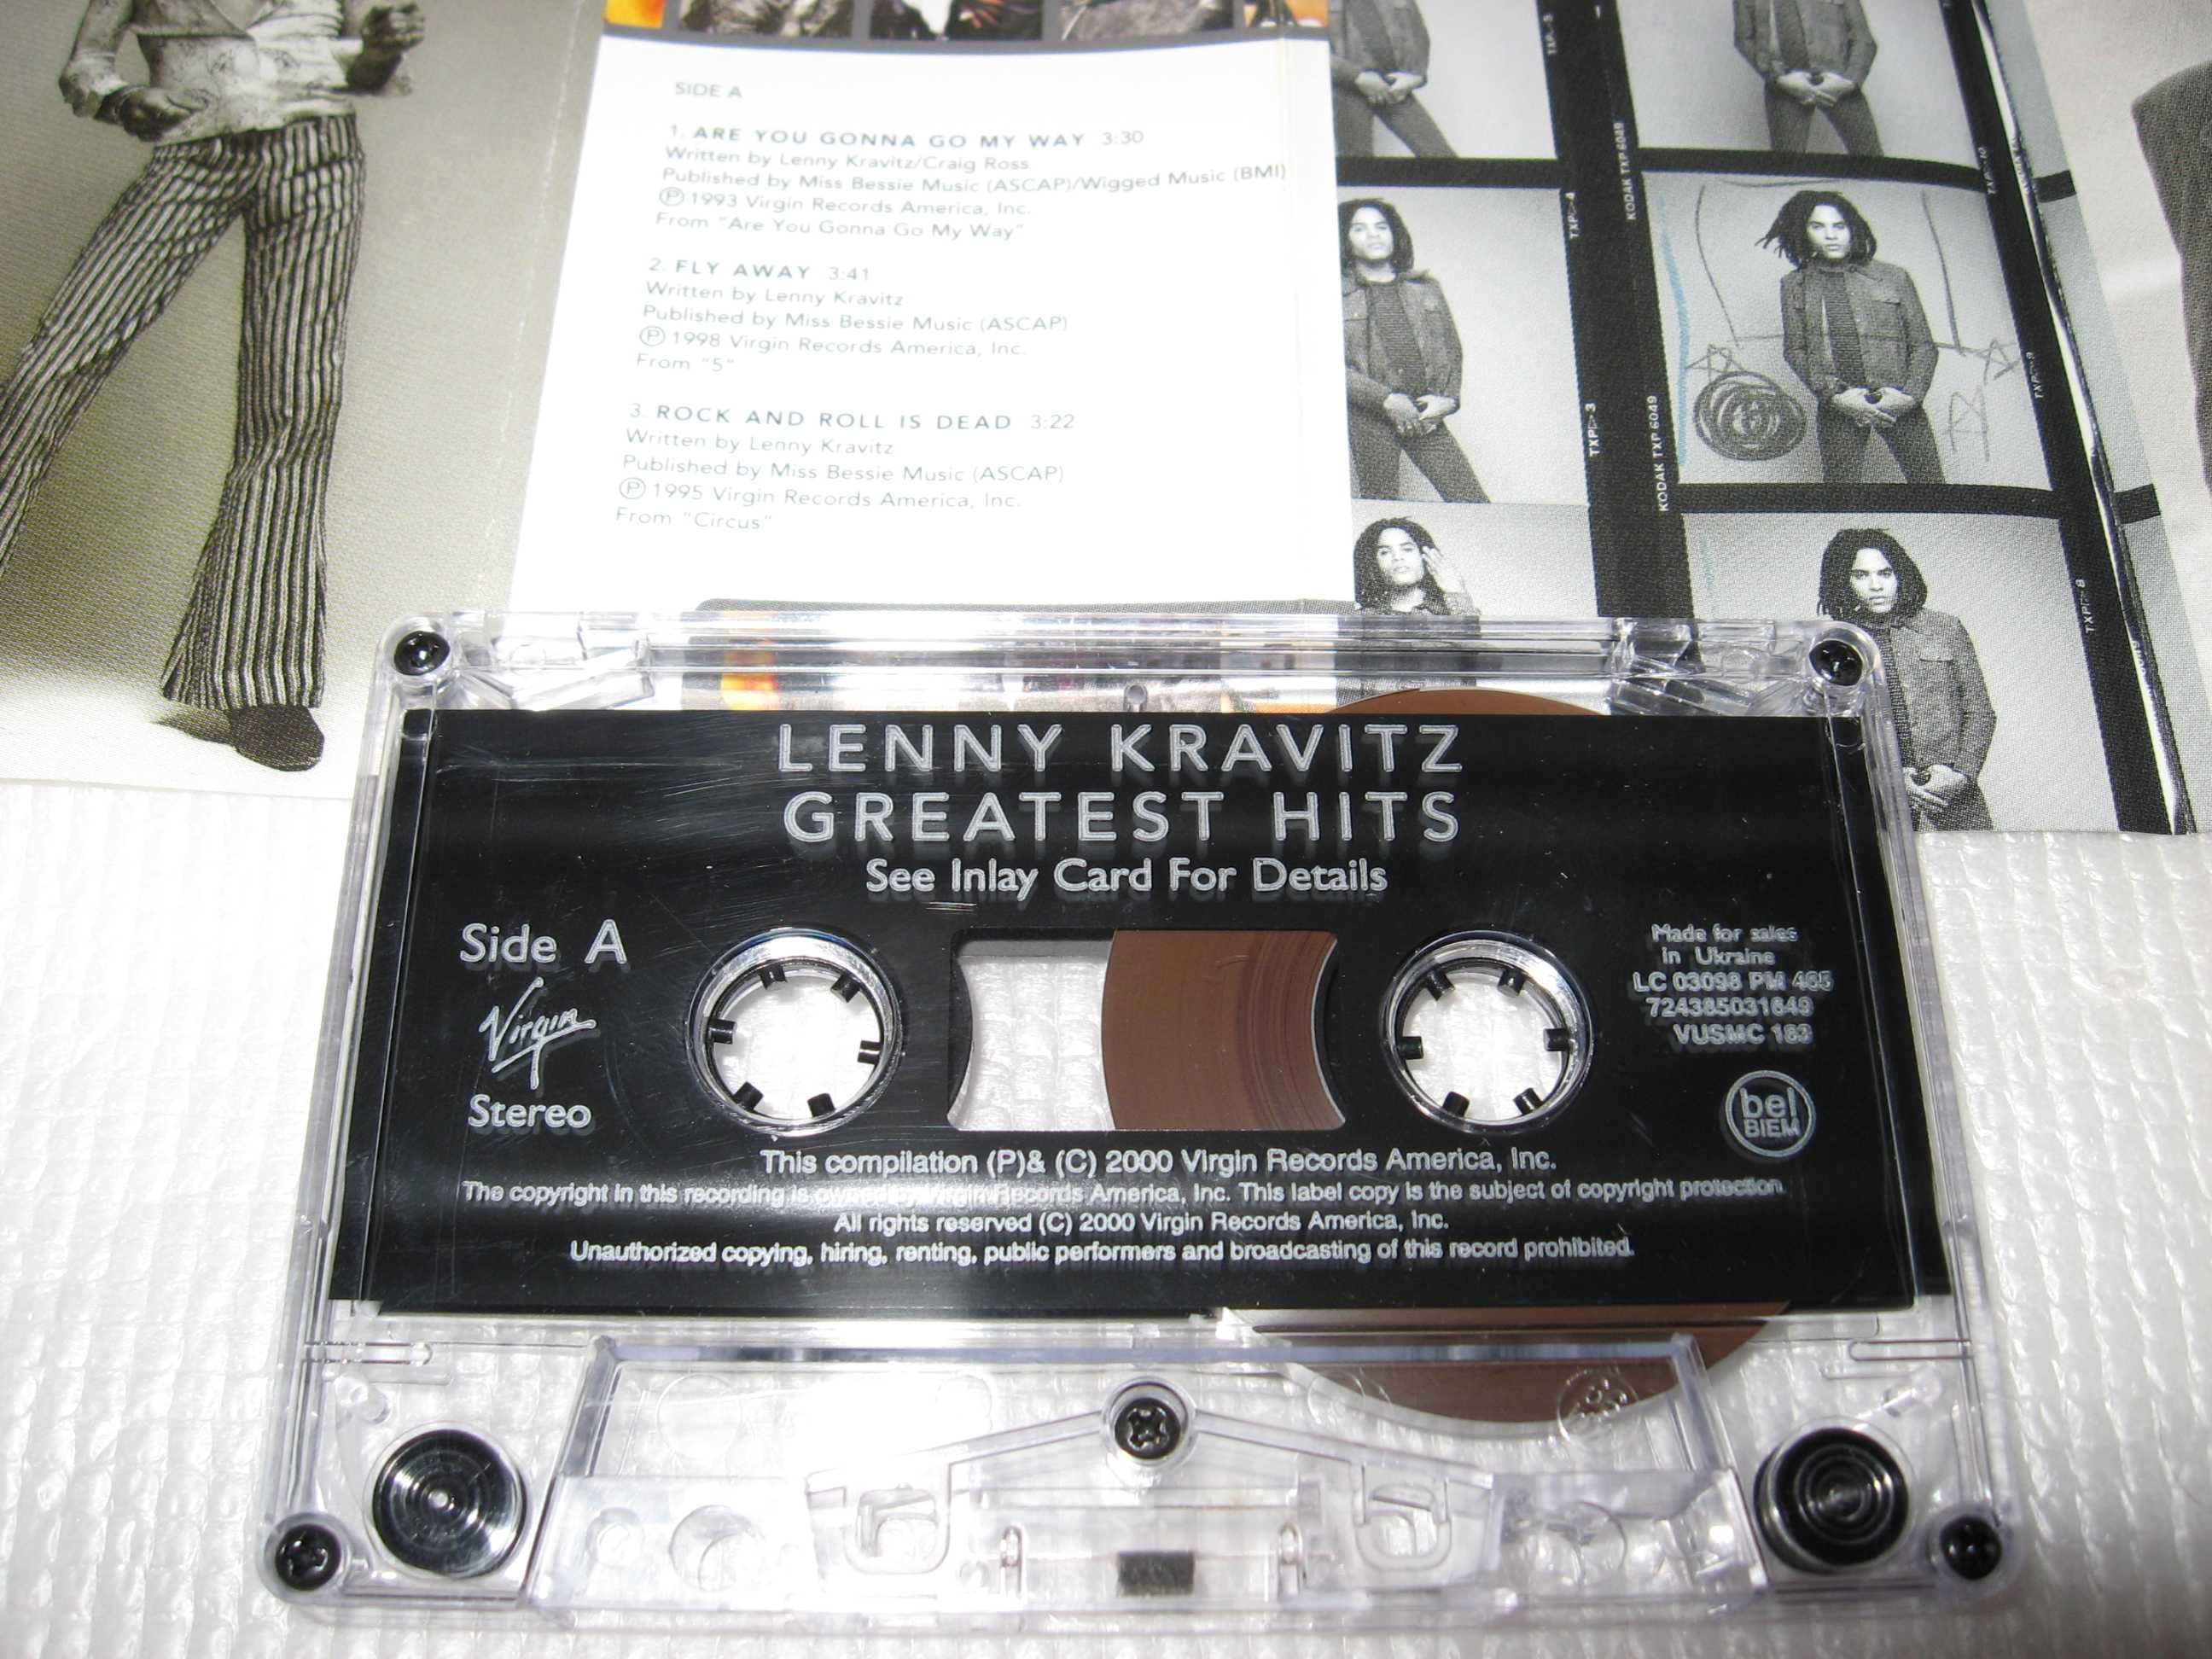 Касета Lenny Kravitz "Greatest Hits", Virgin 7243 8 50316 4 9.